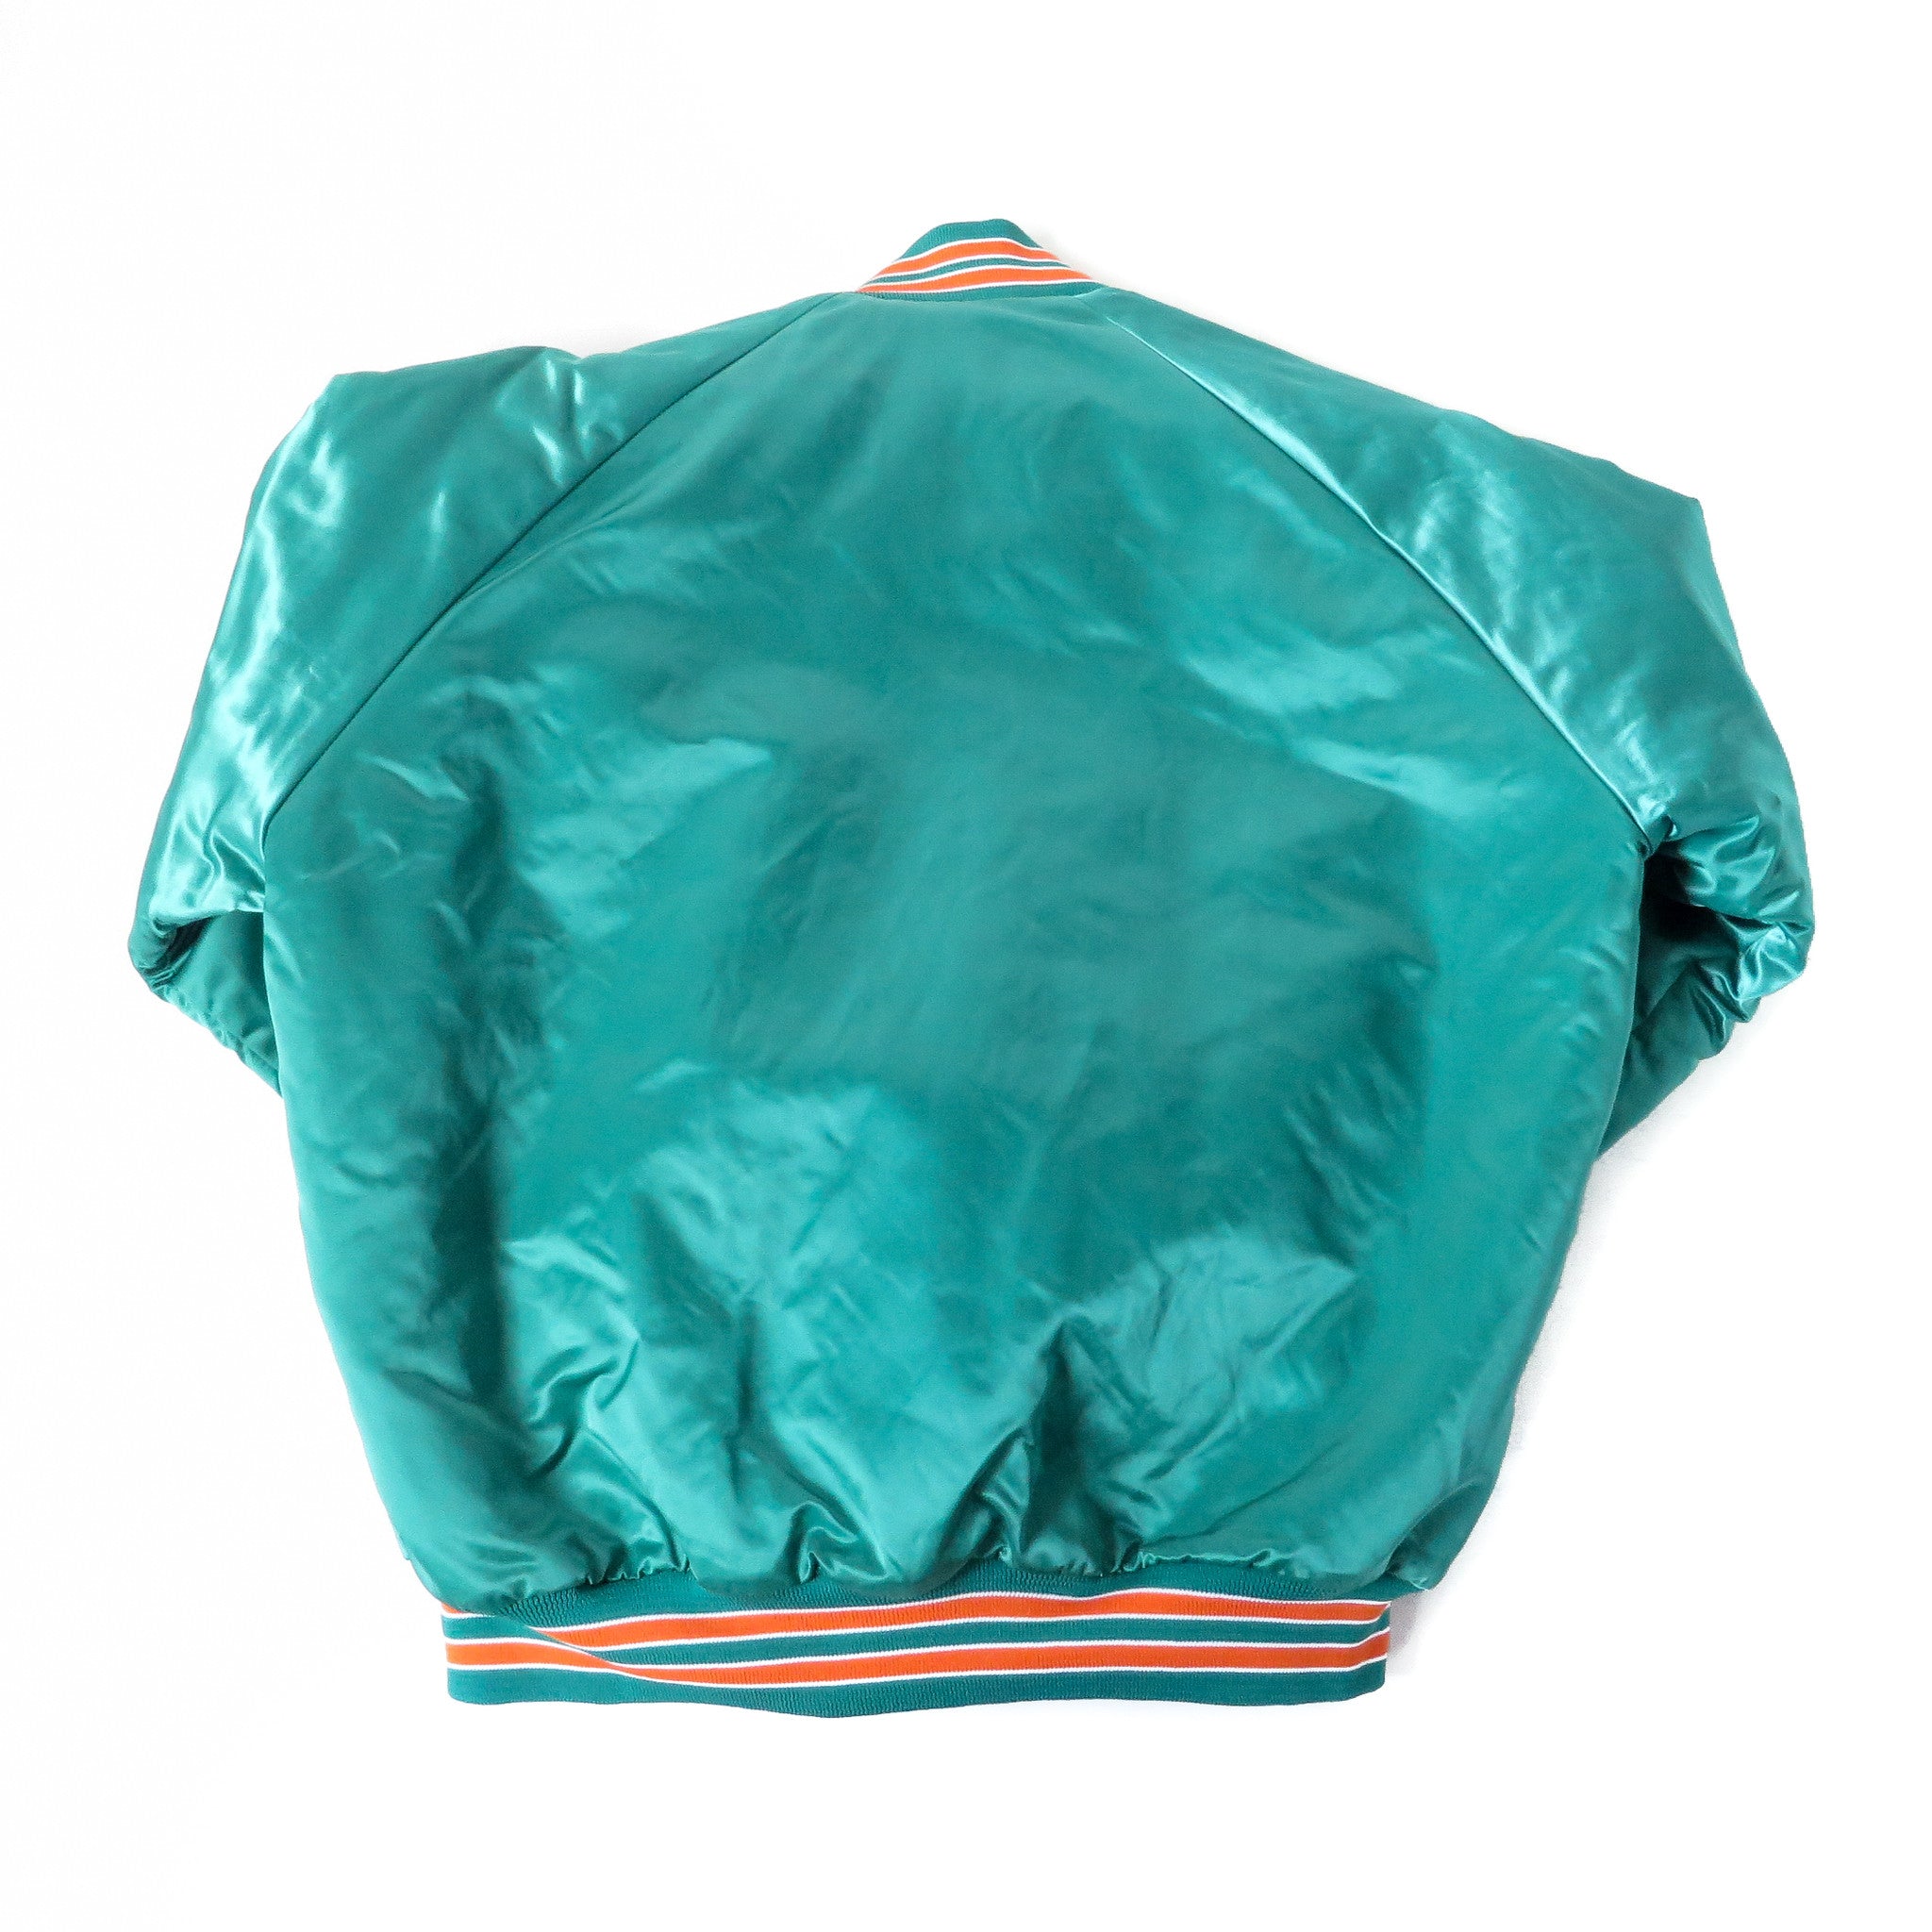 Vintage Miami Dolphins Chalk Line Jacket Sz L